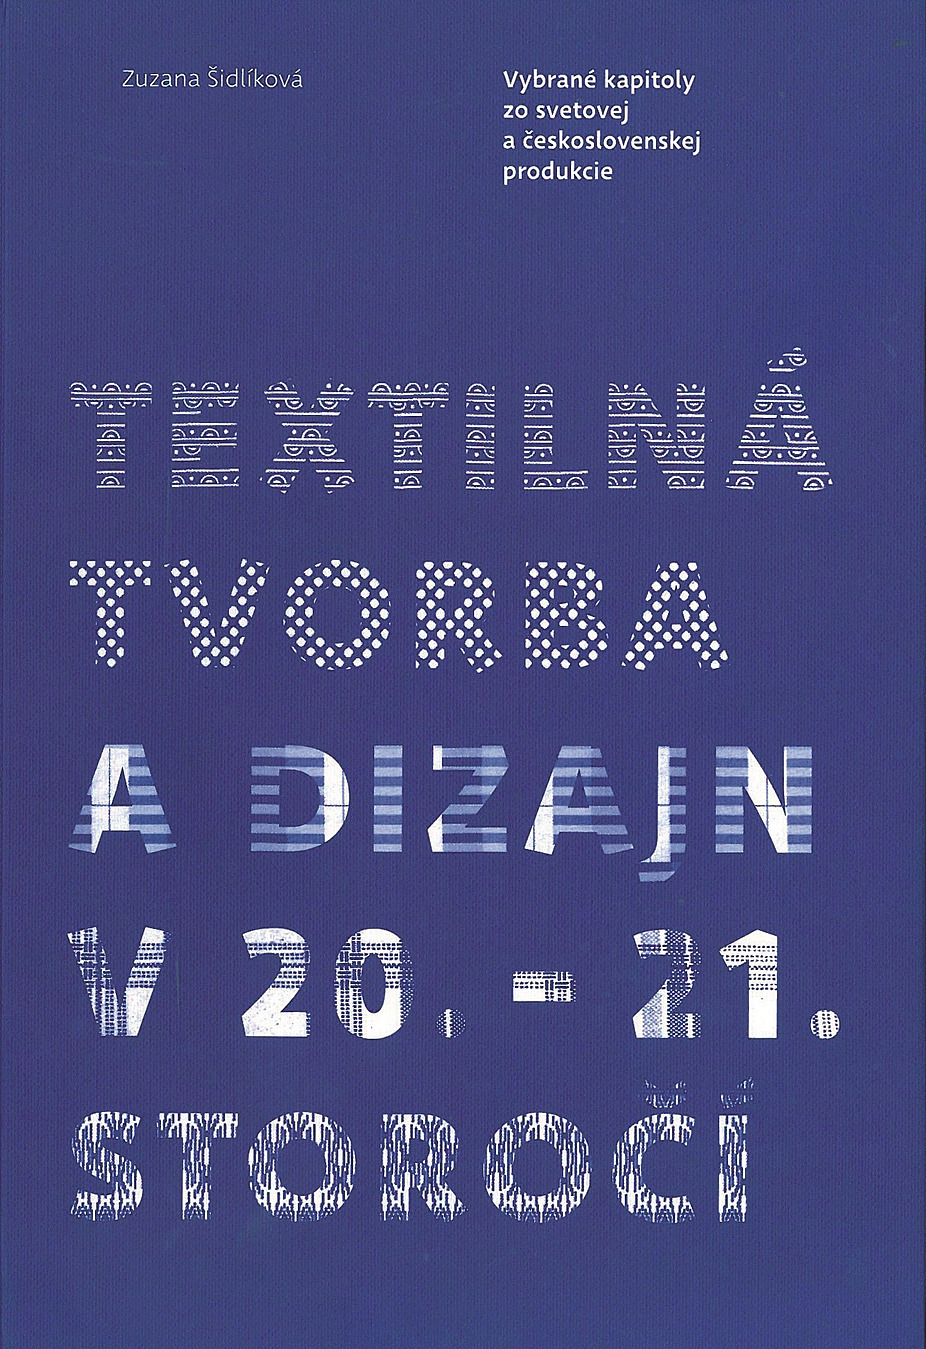 Textilná tvorba a dizajn v 20. – 21. storočí